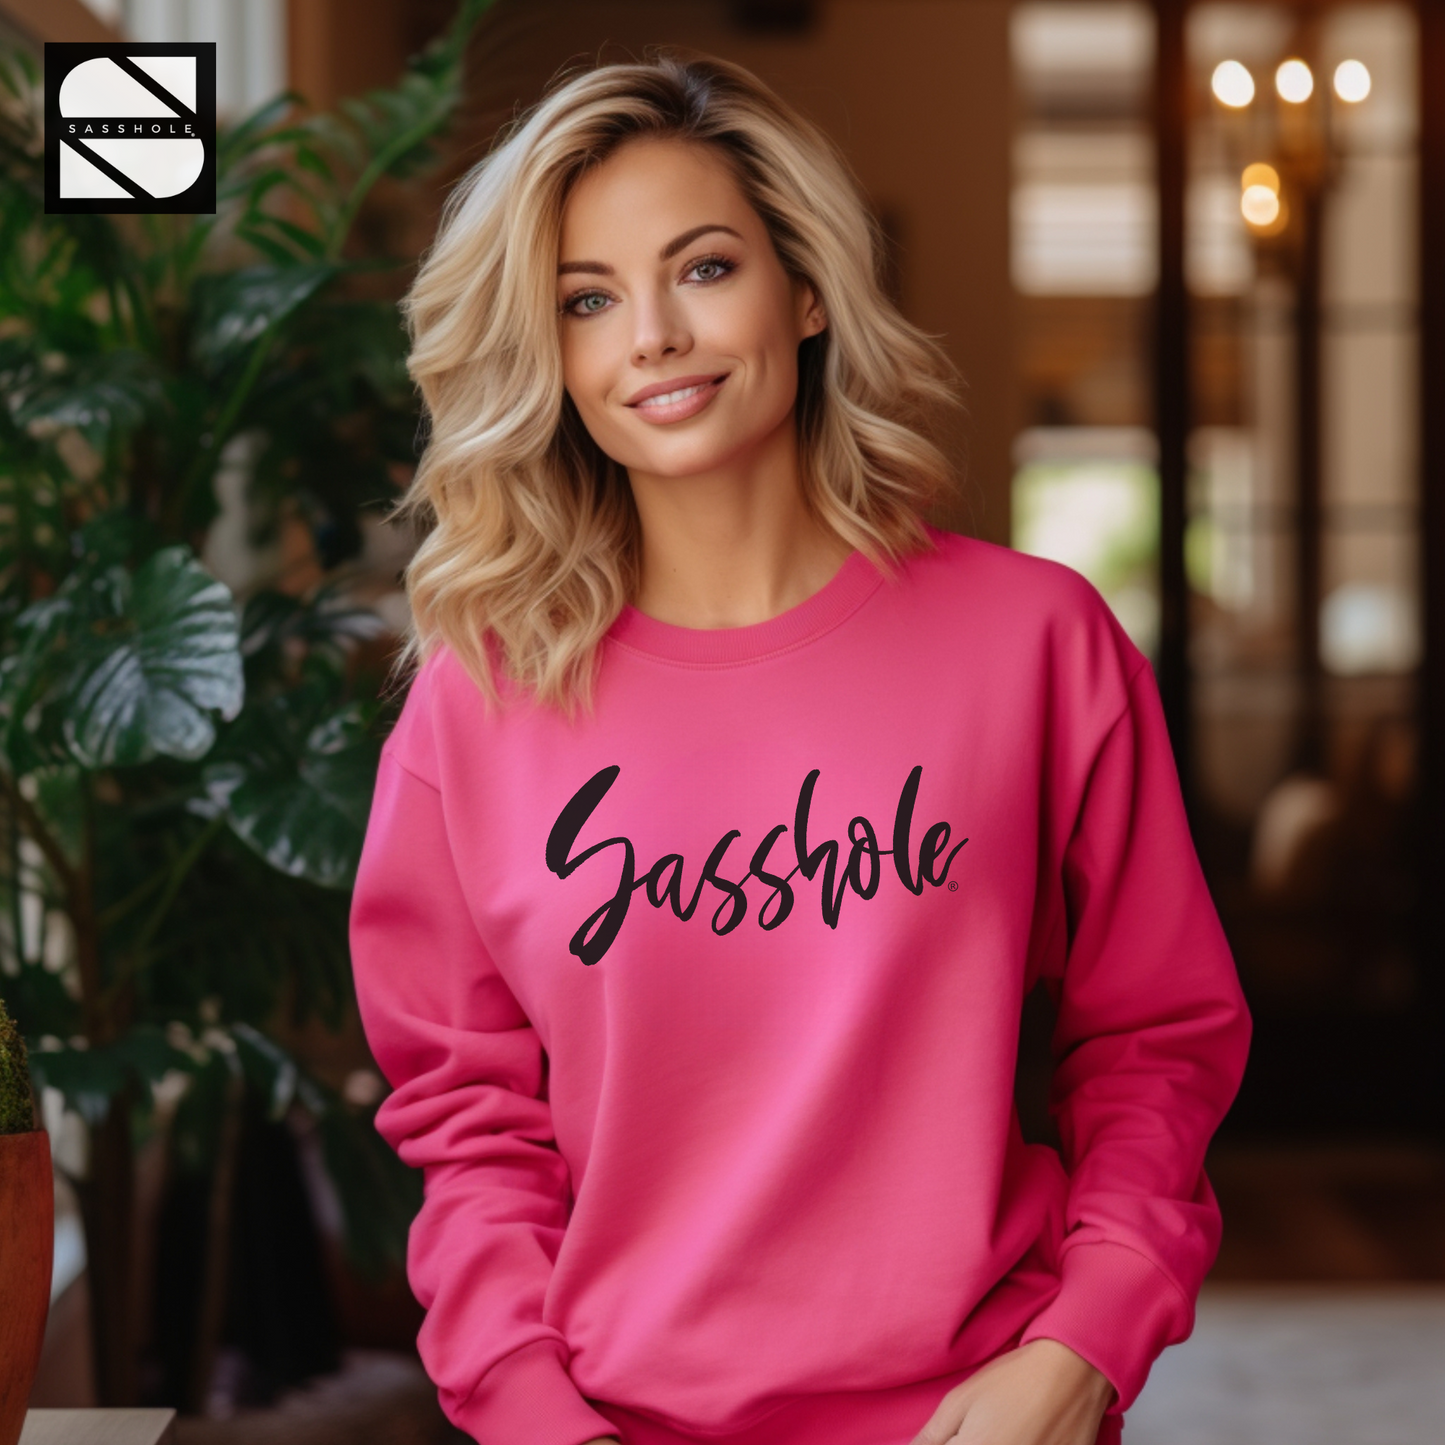 sweatshirts women's pink